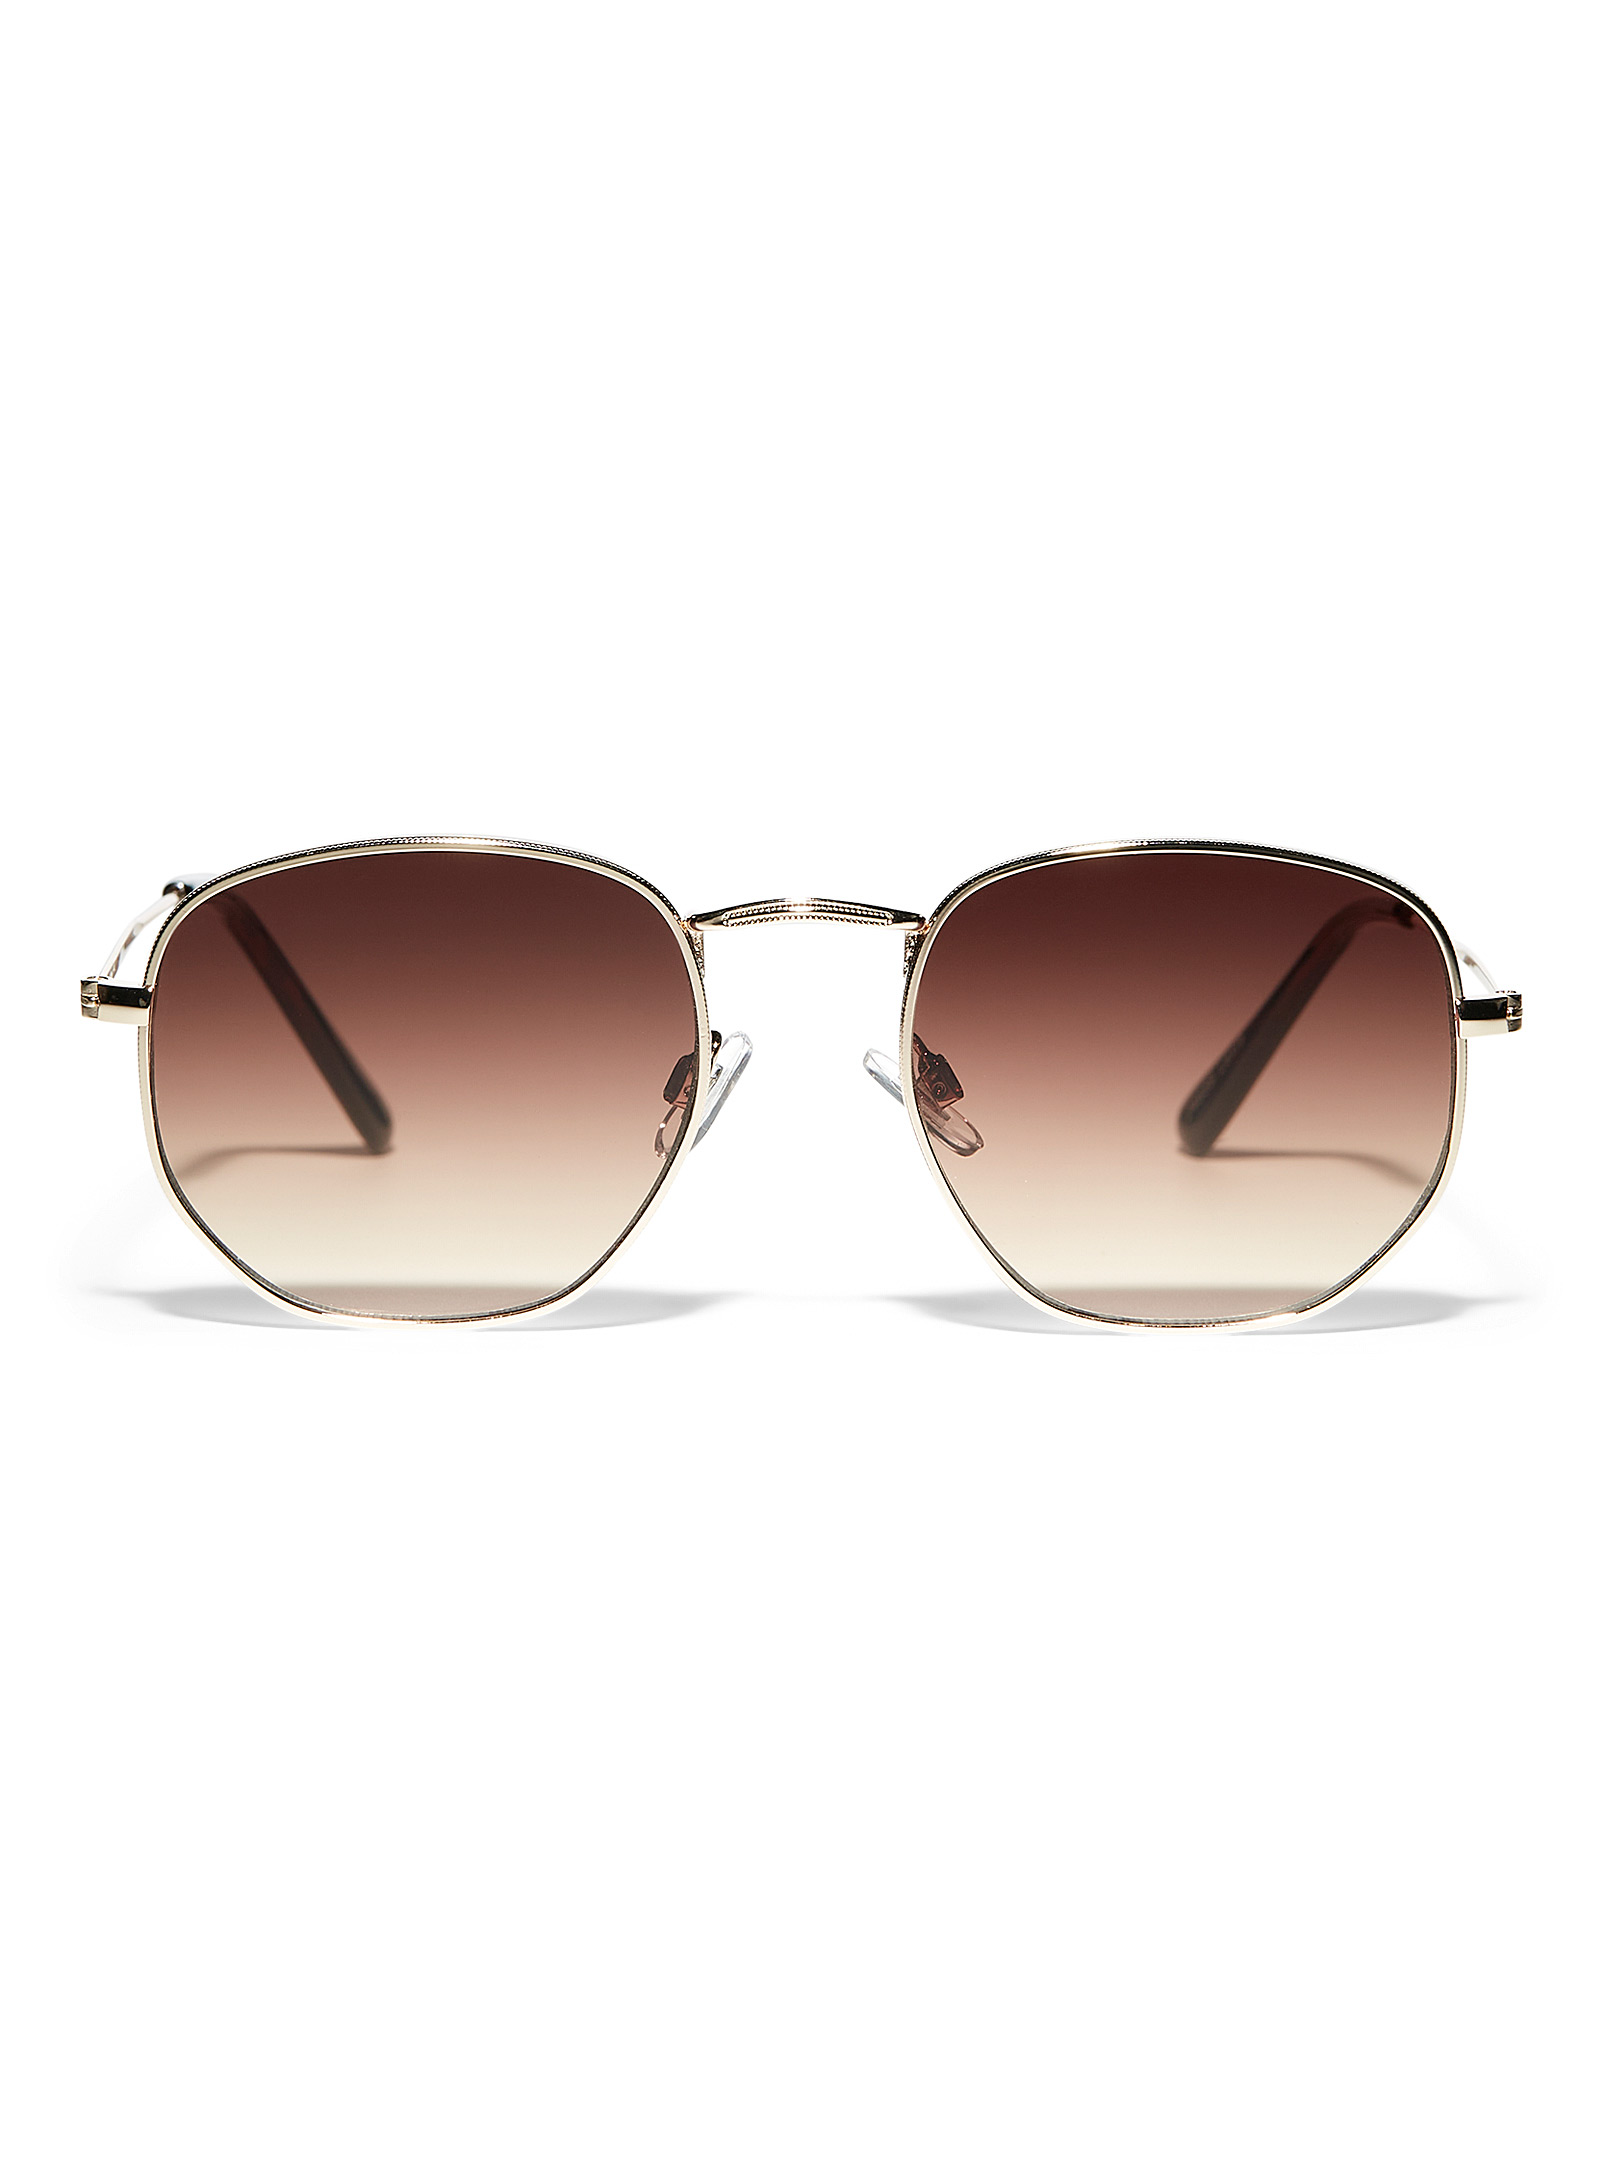 Simons - Women's Lexie round sunglasses